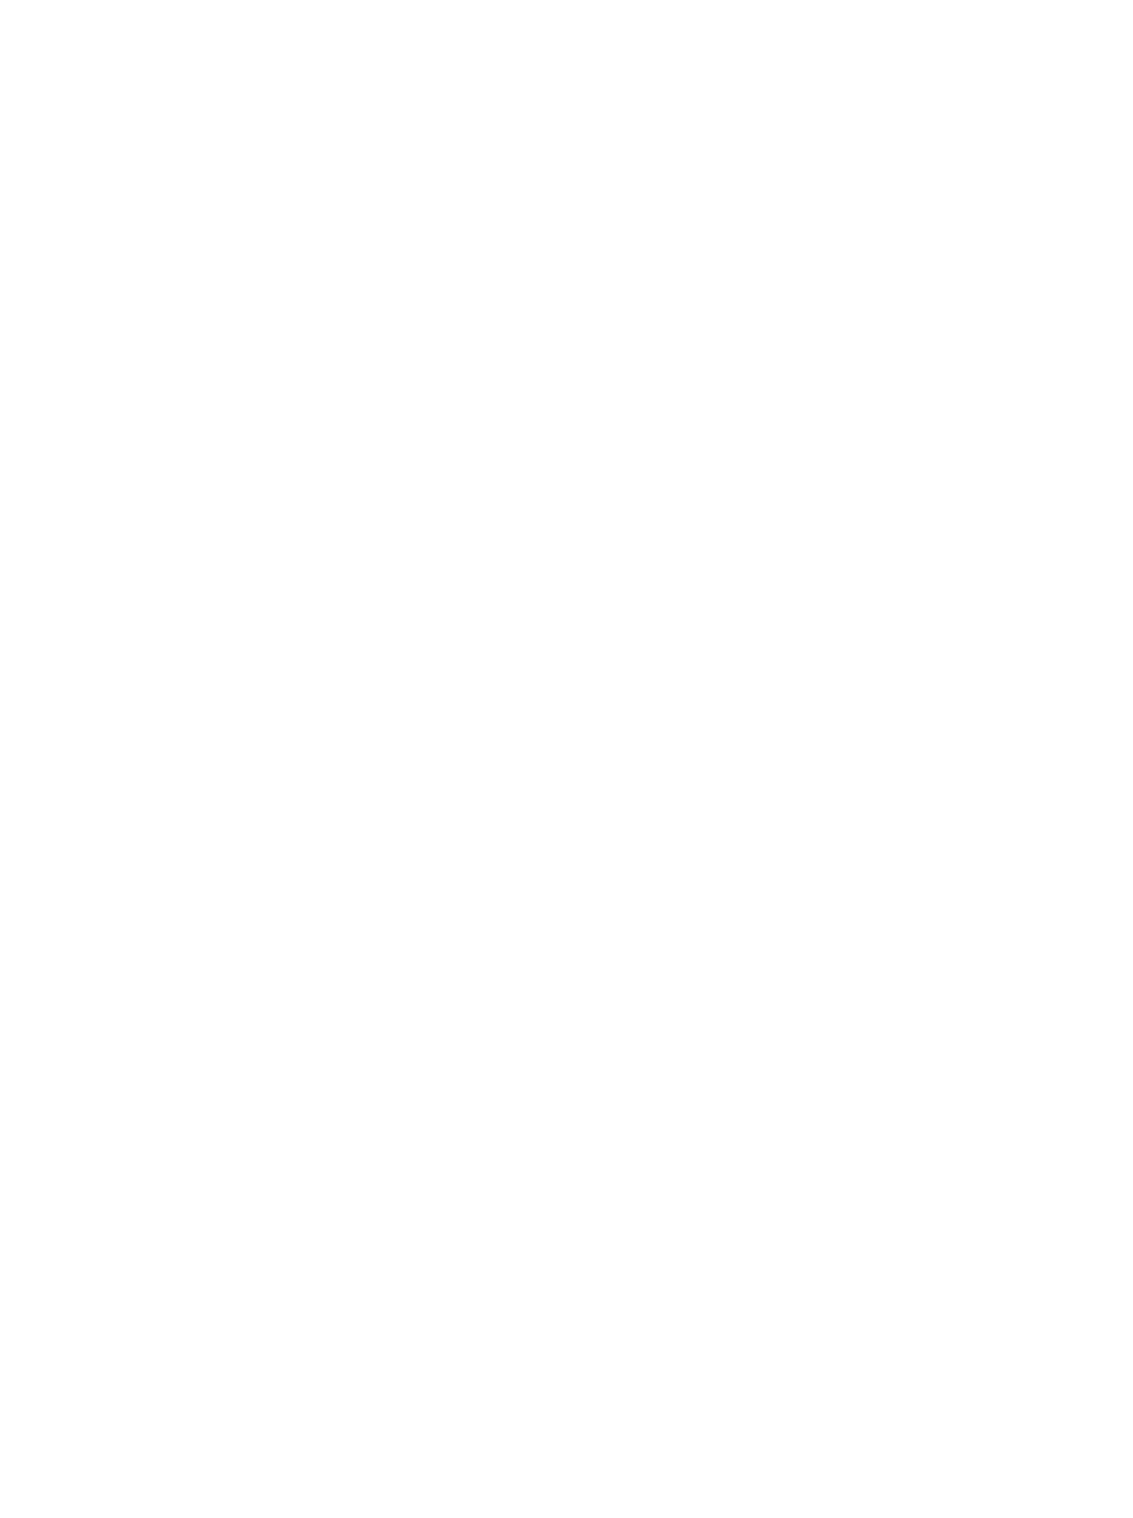 Robinhood logo pour fonds sombres (PNG transparent)